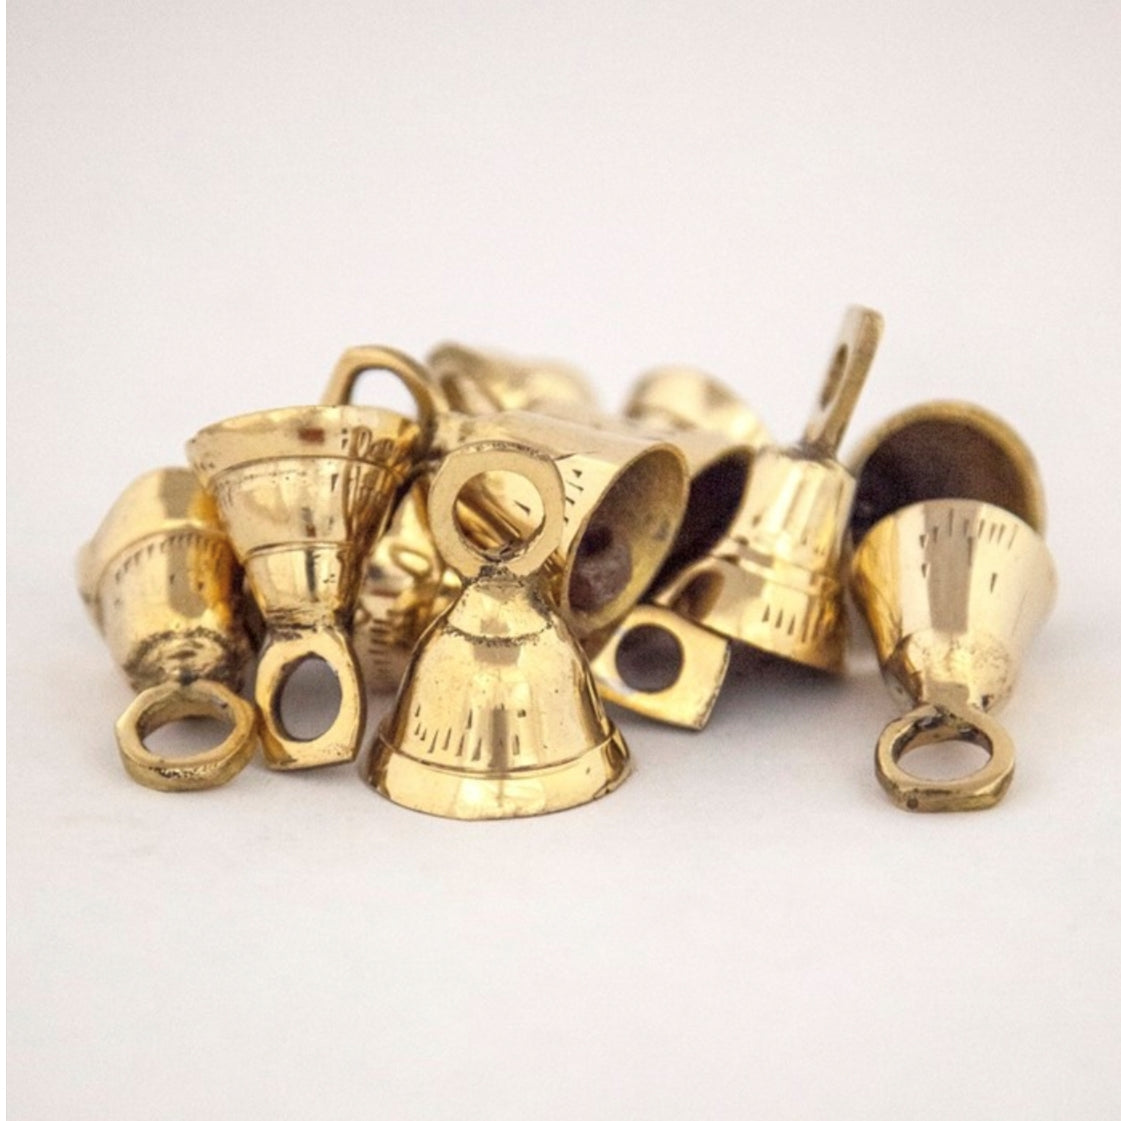 Shop Unique 2 Assorted Brass Bells Set - Perfect Home Decor Addition